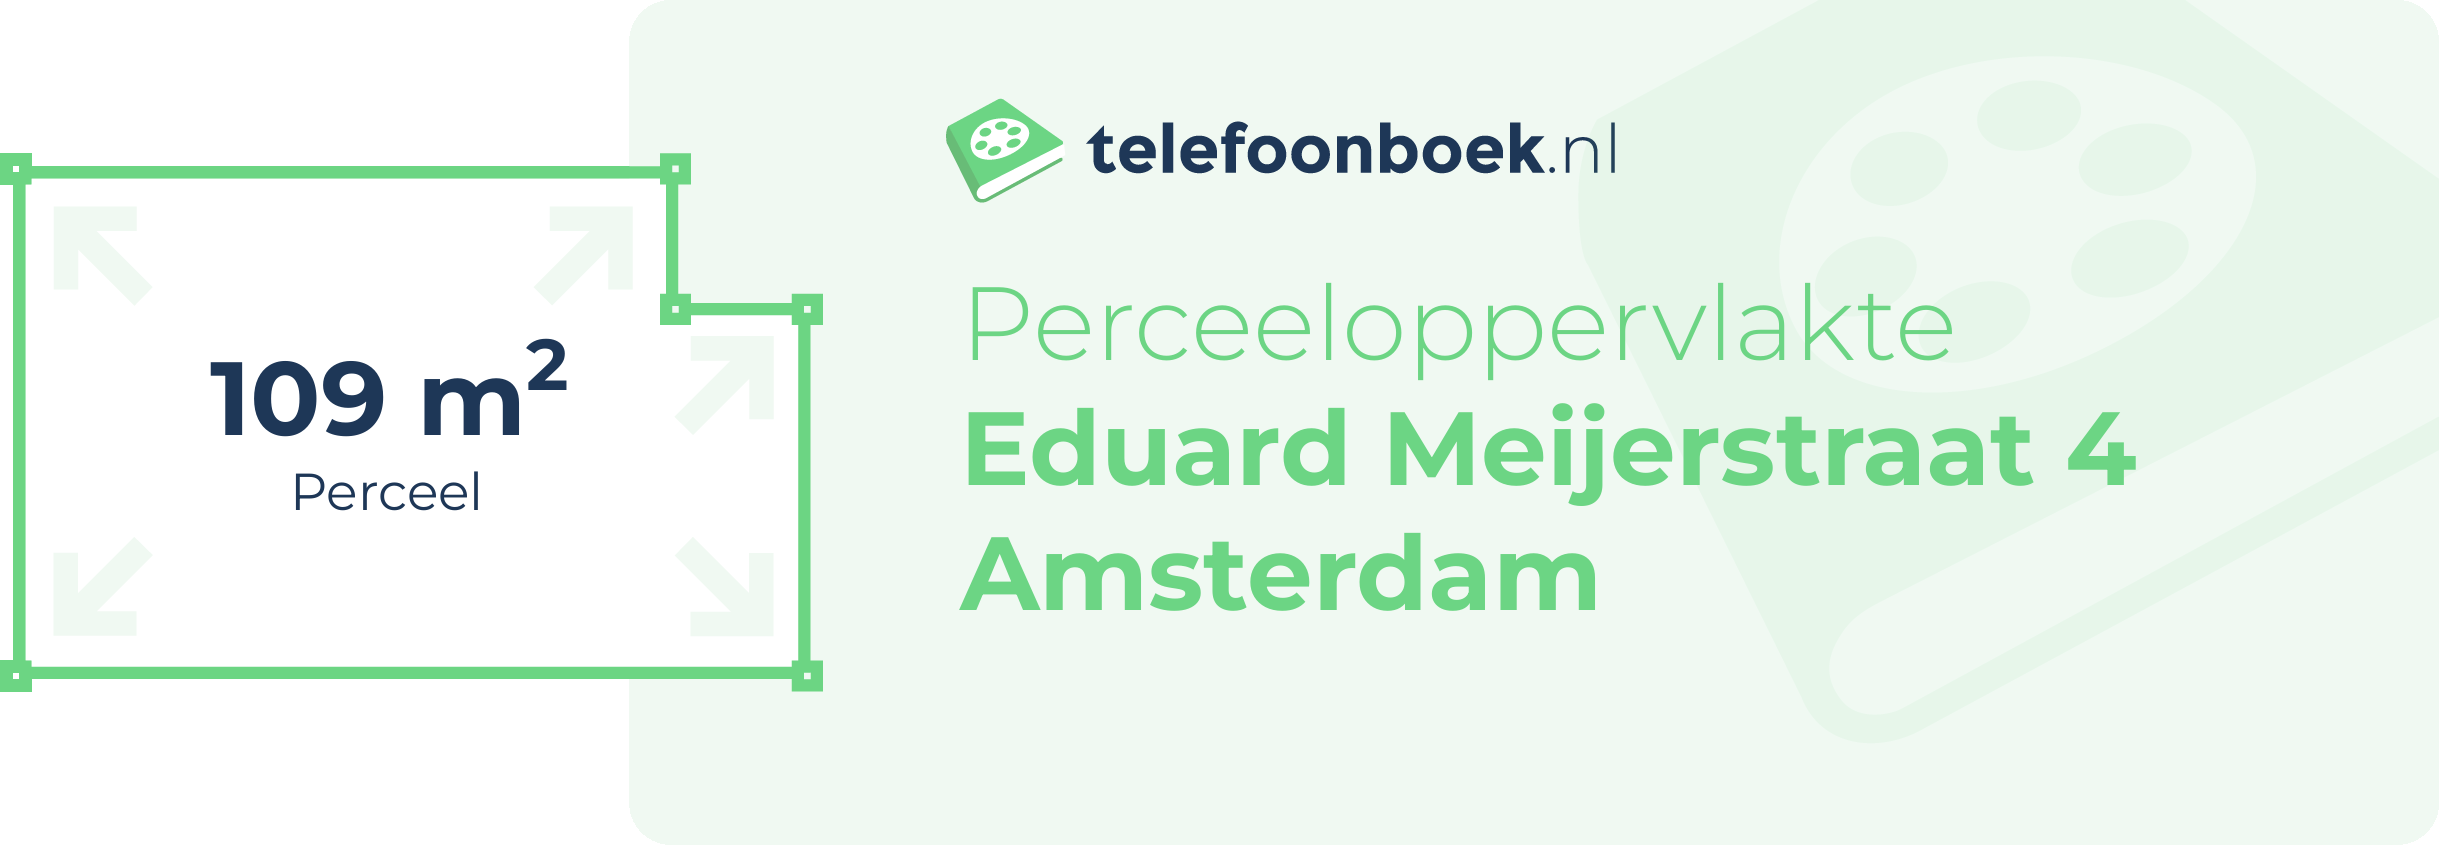 Perceeloppervlakte Eduard Meijerstraat 4 Amsterdam